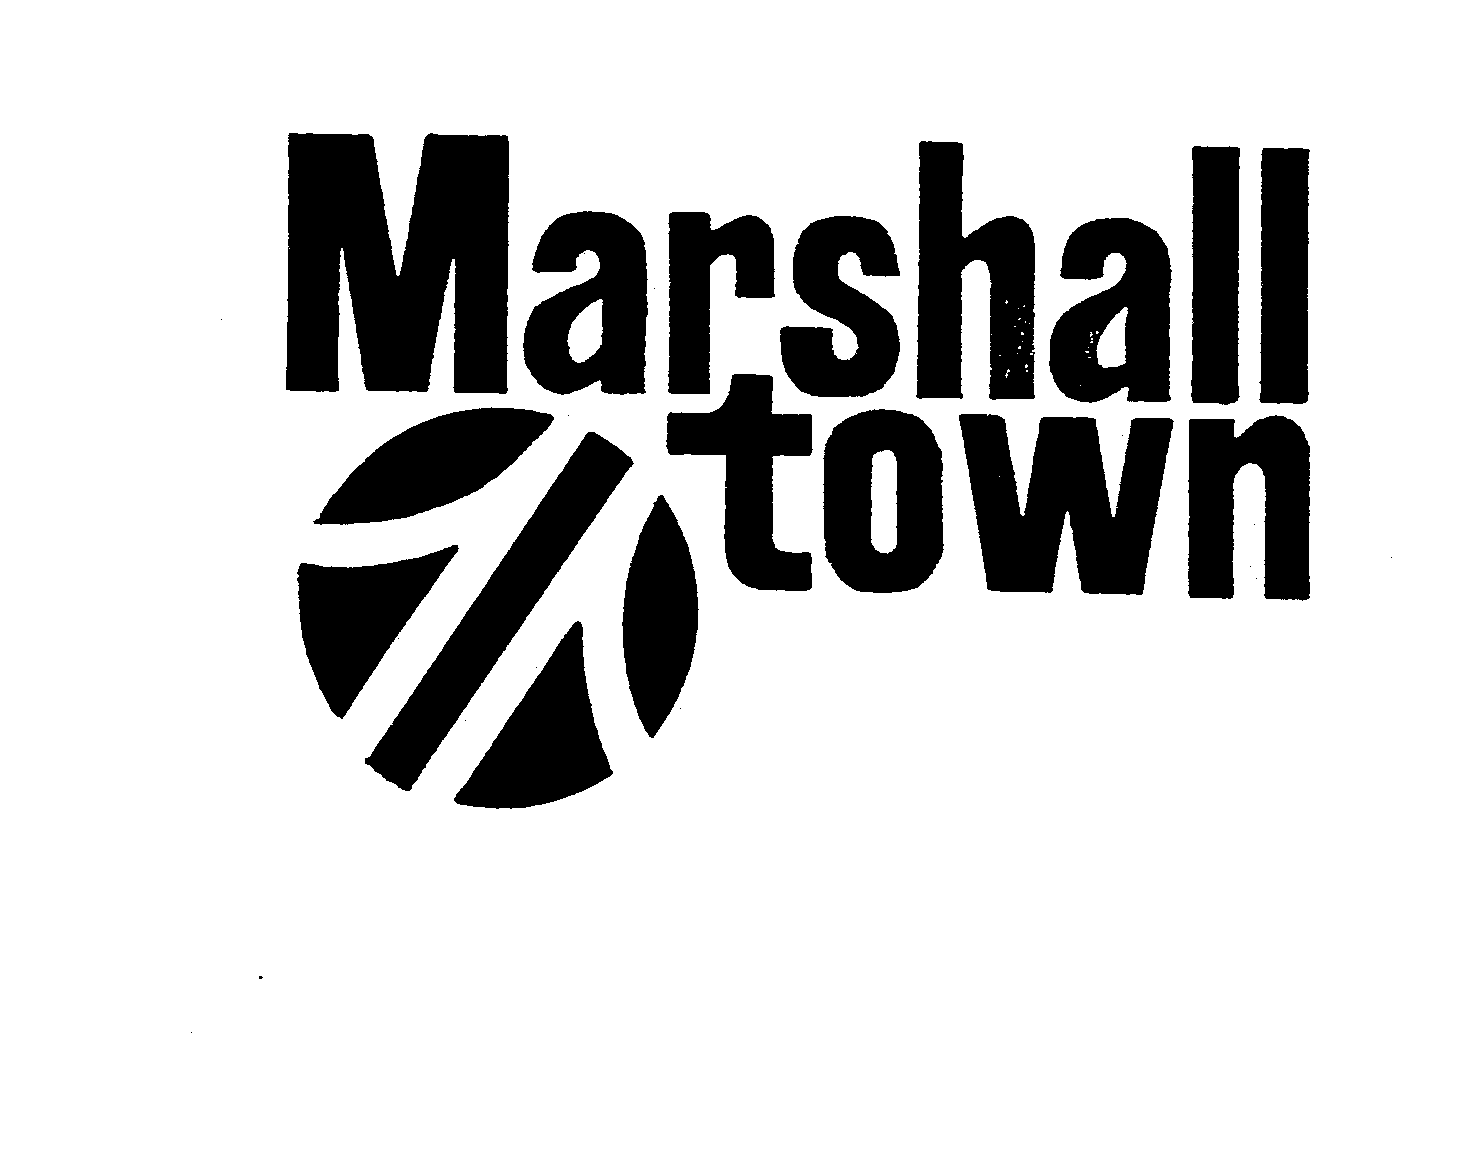  MARSHALL TOWN